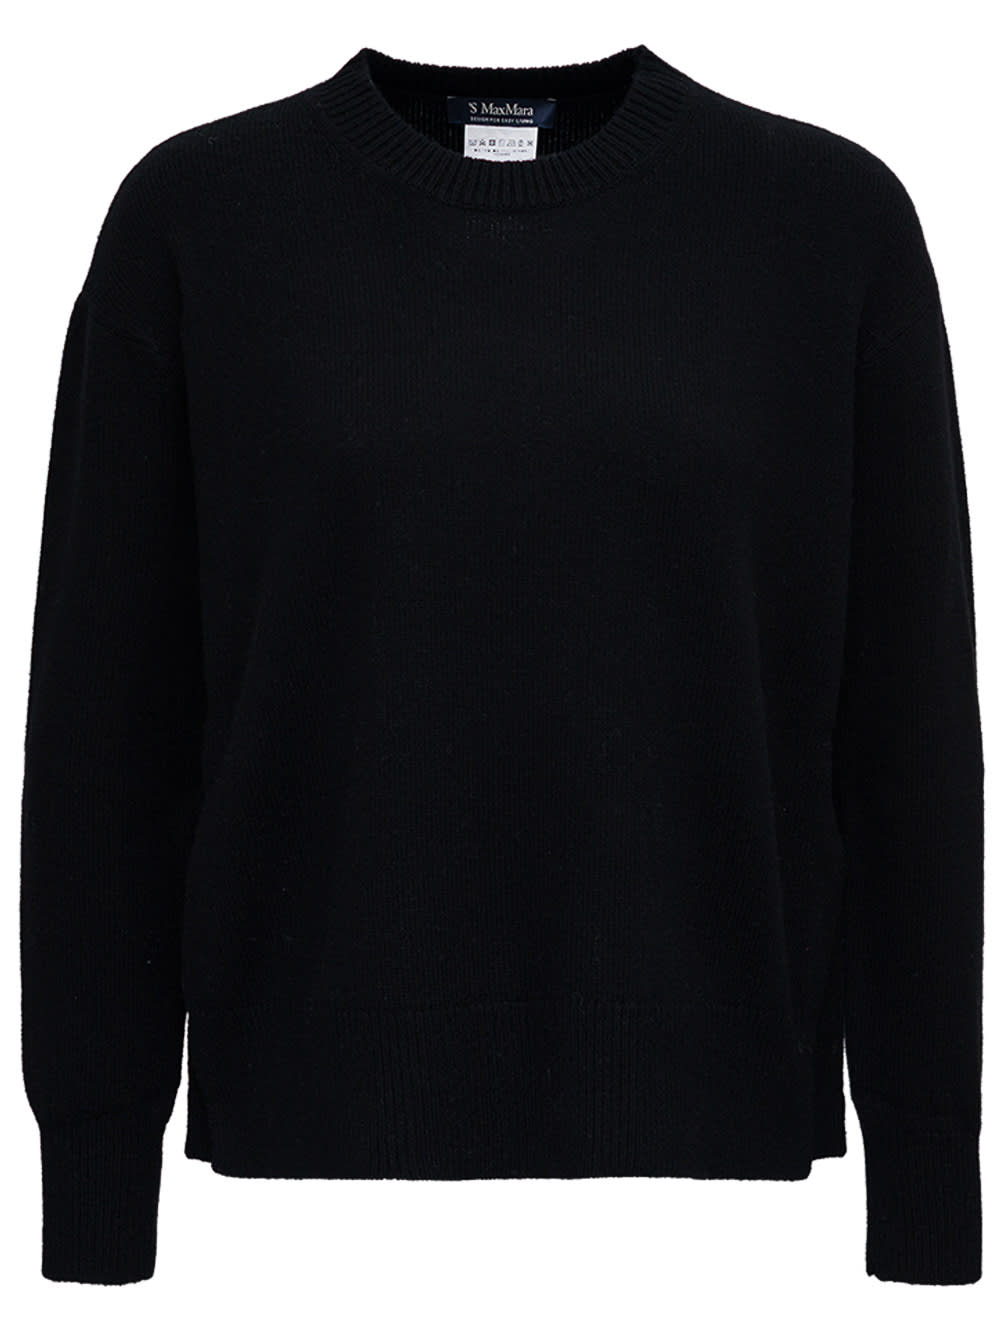 'S Max Mara Black Wool And Cashmere Sweater